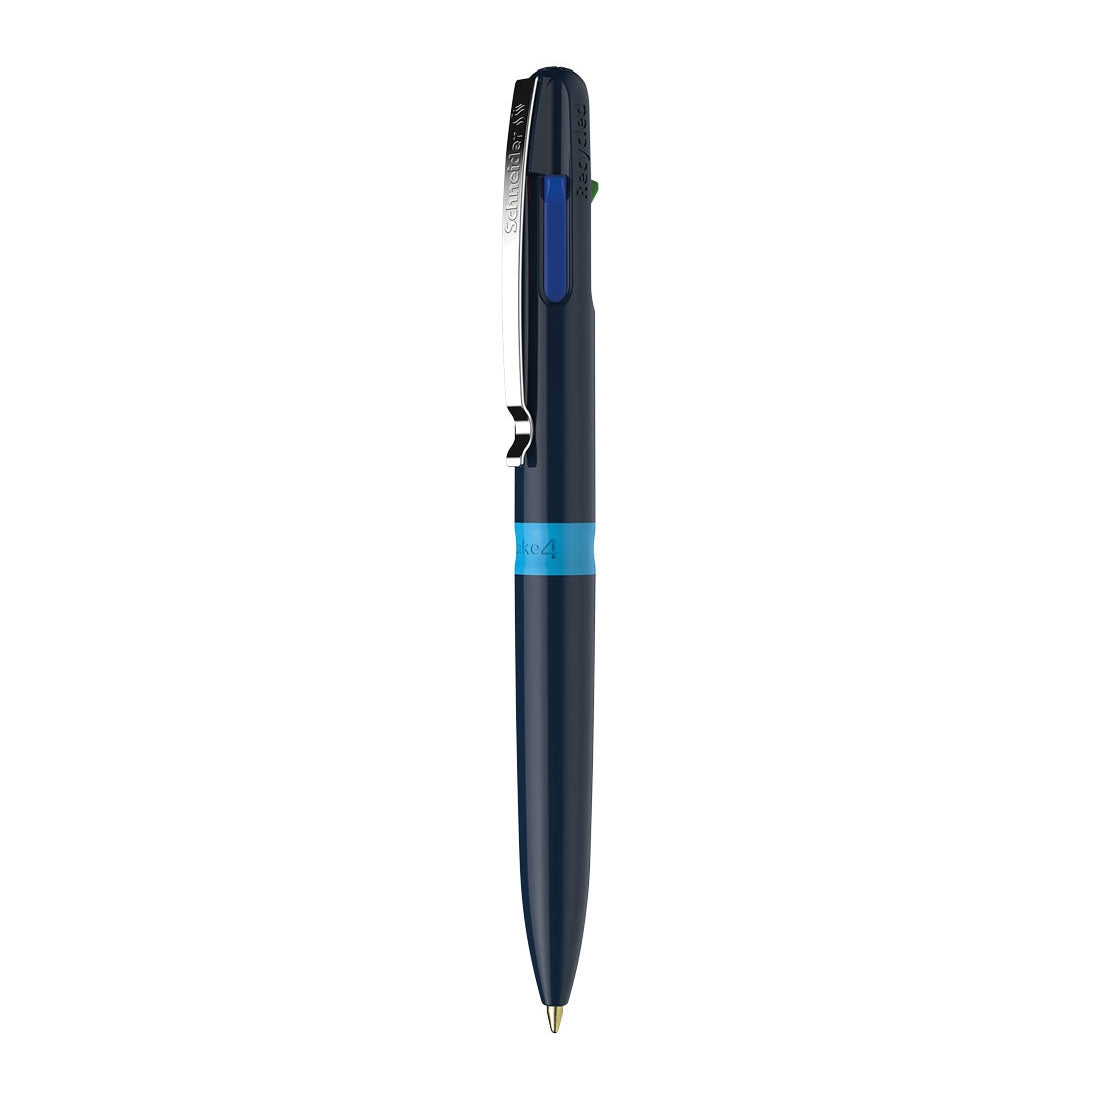 Take 4 Multi 4- Colour Ballpoint Pens M, Box of 10 units - Blue